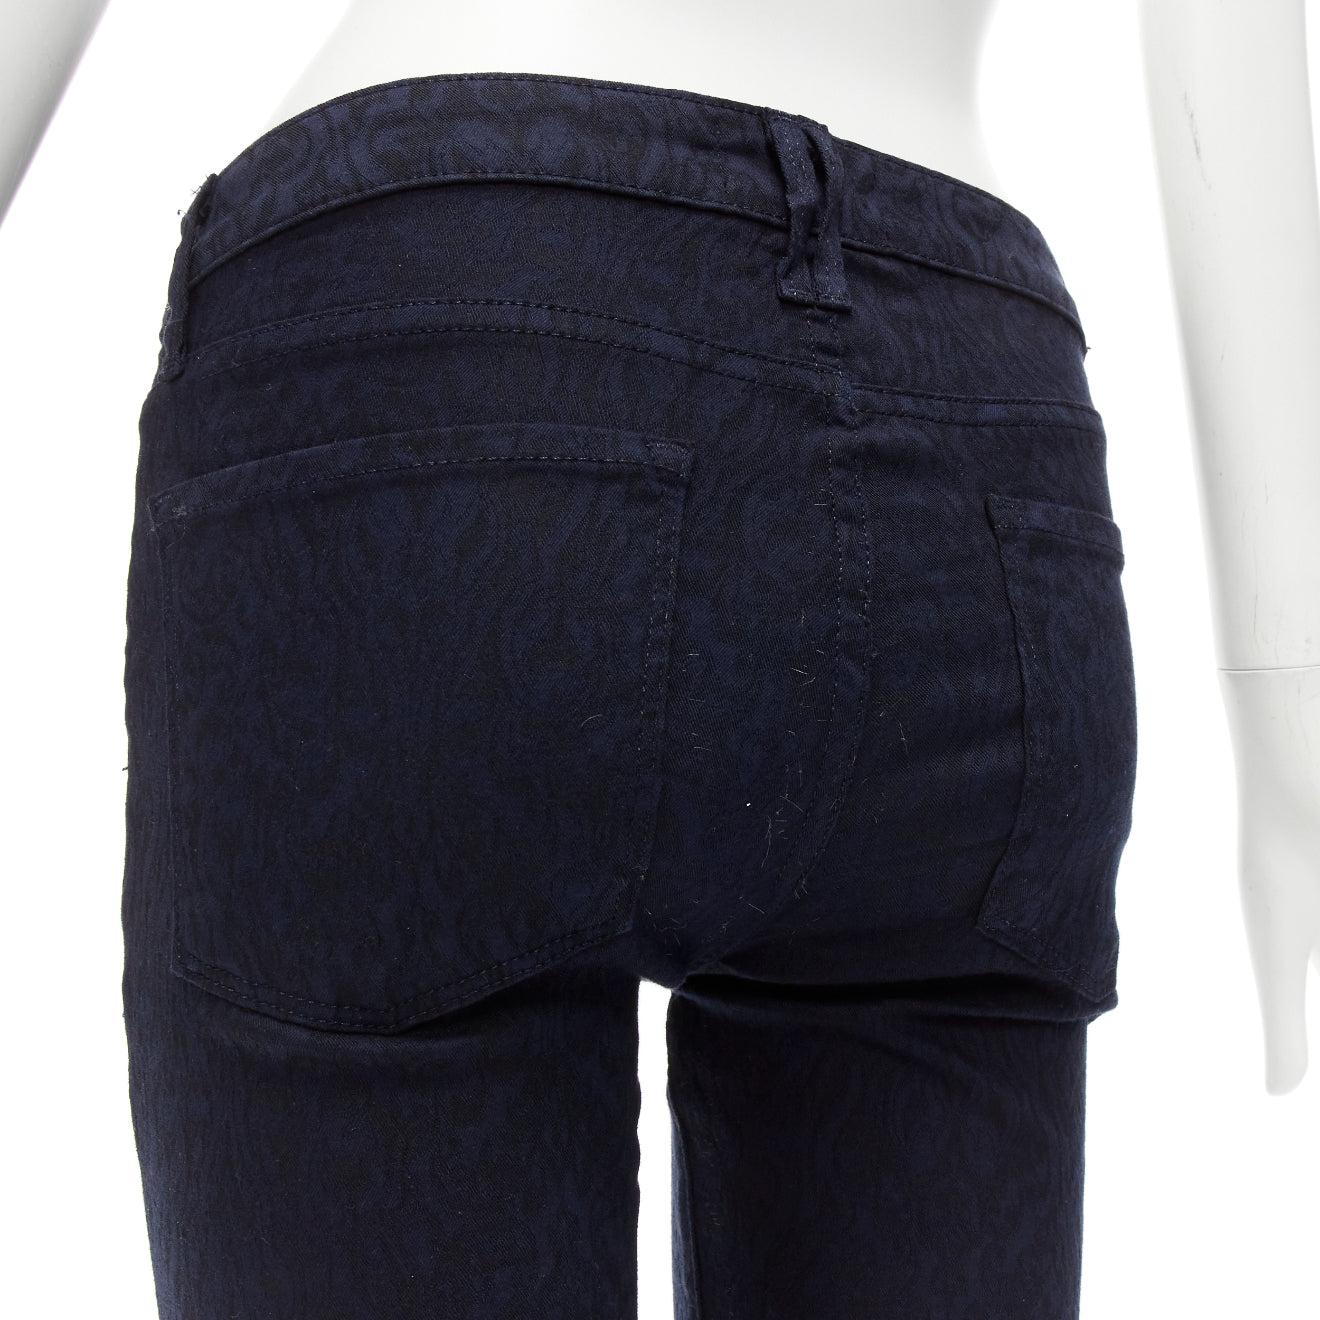 VINCE navy crinkle jacquard jersey mid waist skinny jeans pants 27